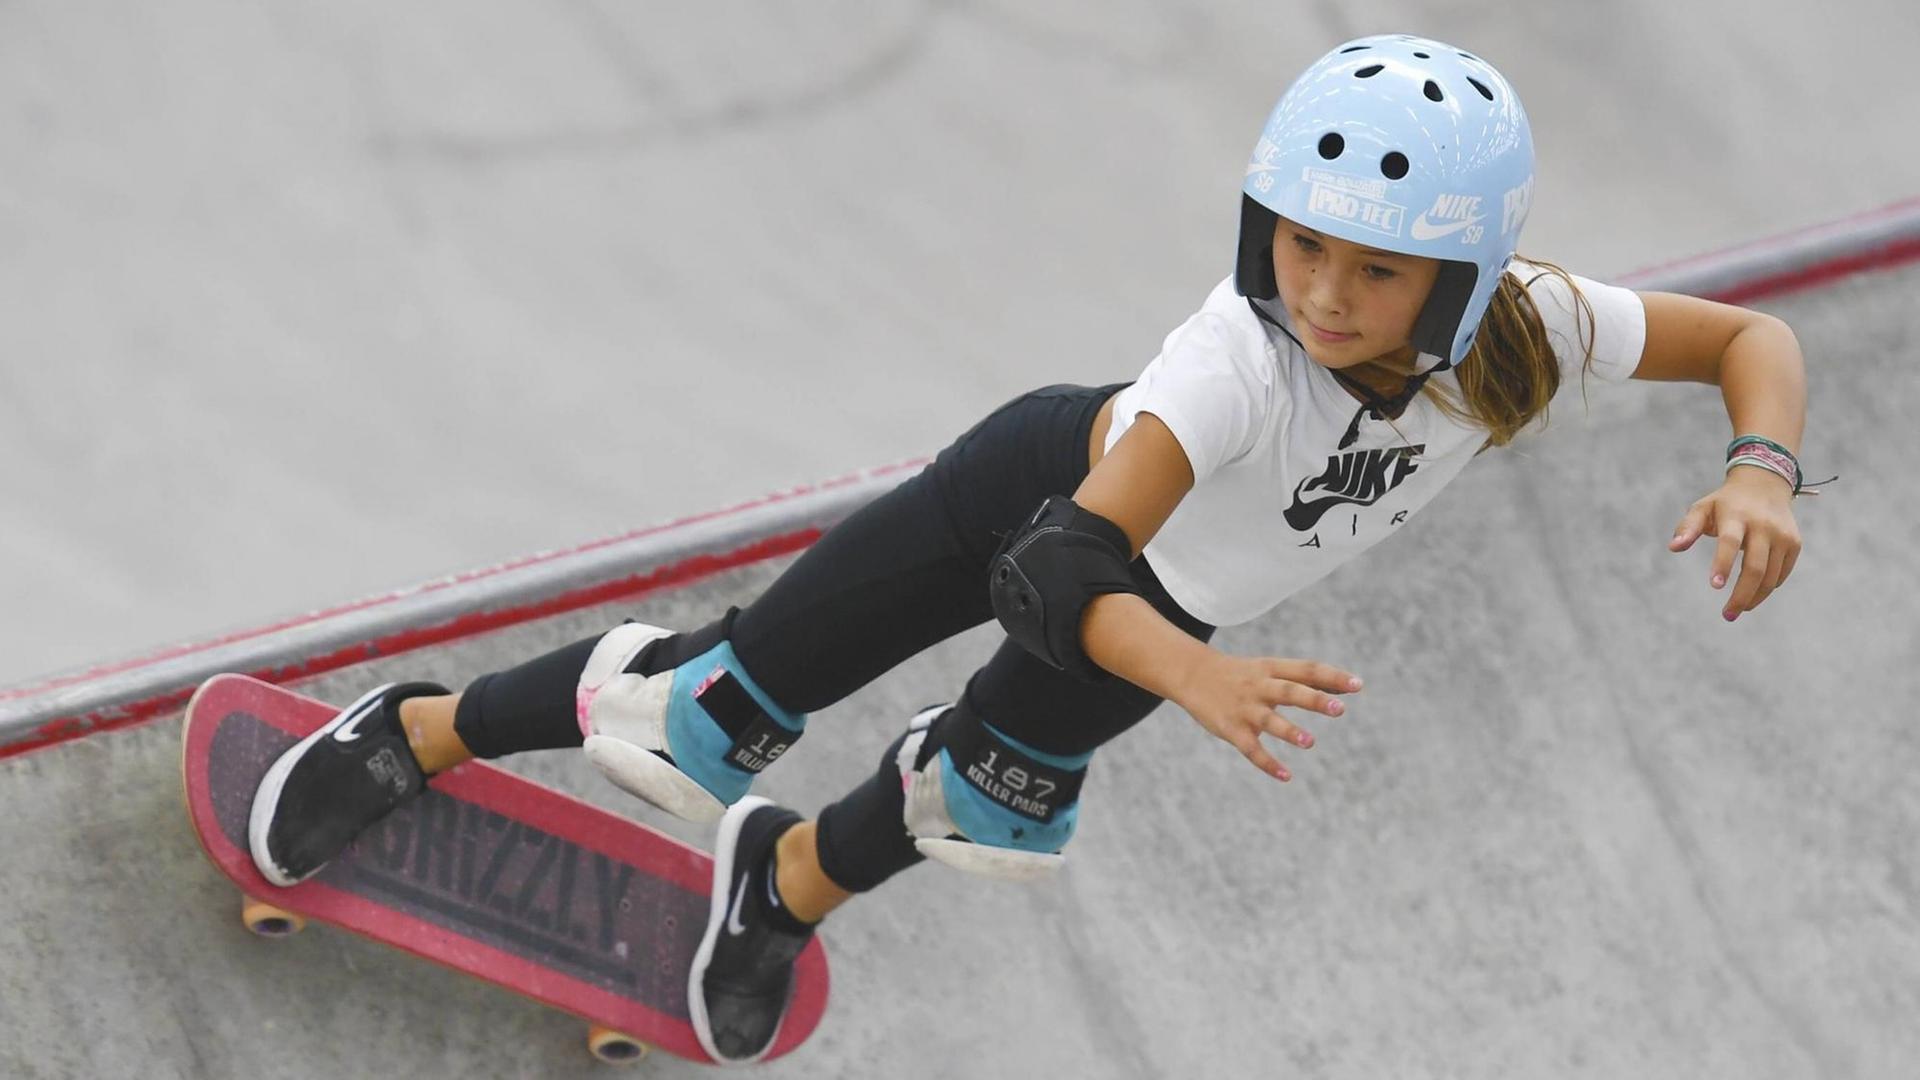 Die elfjährige Sky Brown ist die jüngste Profi-Skateboarderin der Welt.